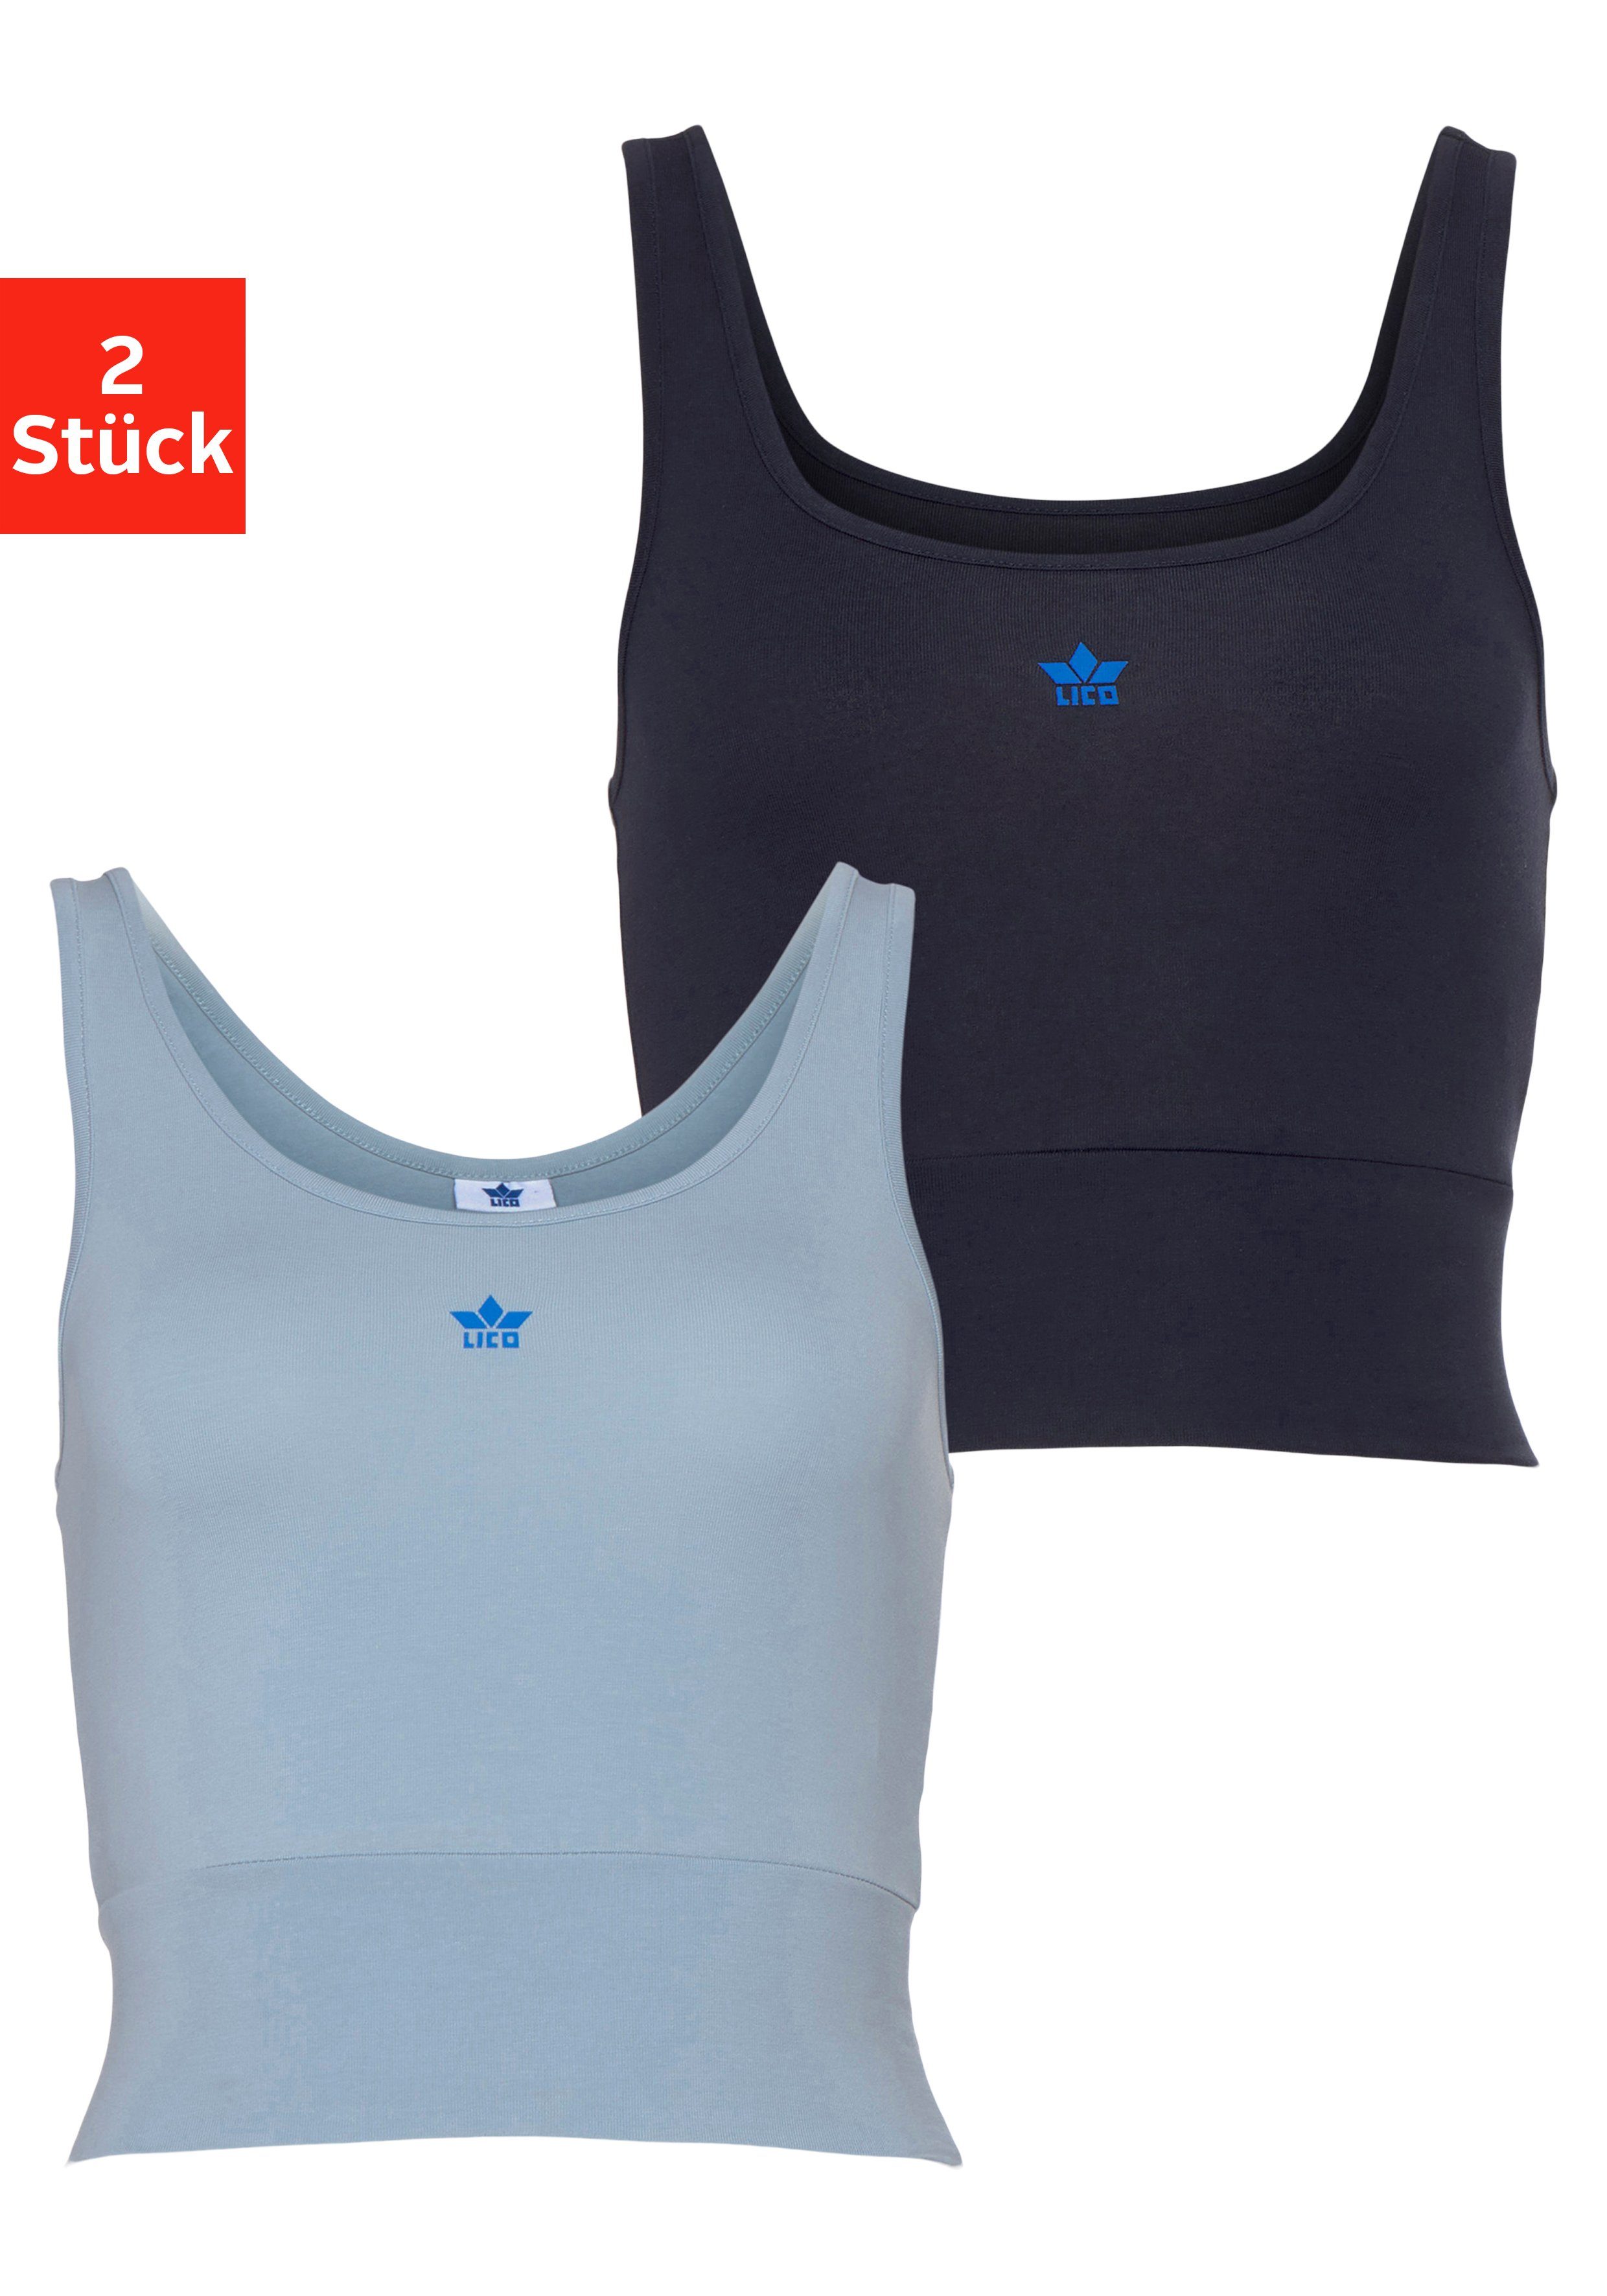 Lico Funktionsshirt (2er-Pack) im Doppelpack, hellblau, navy Loungewear